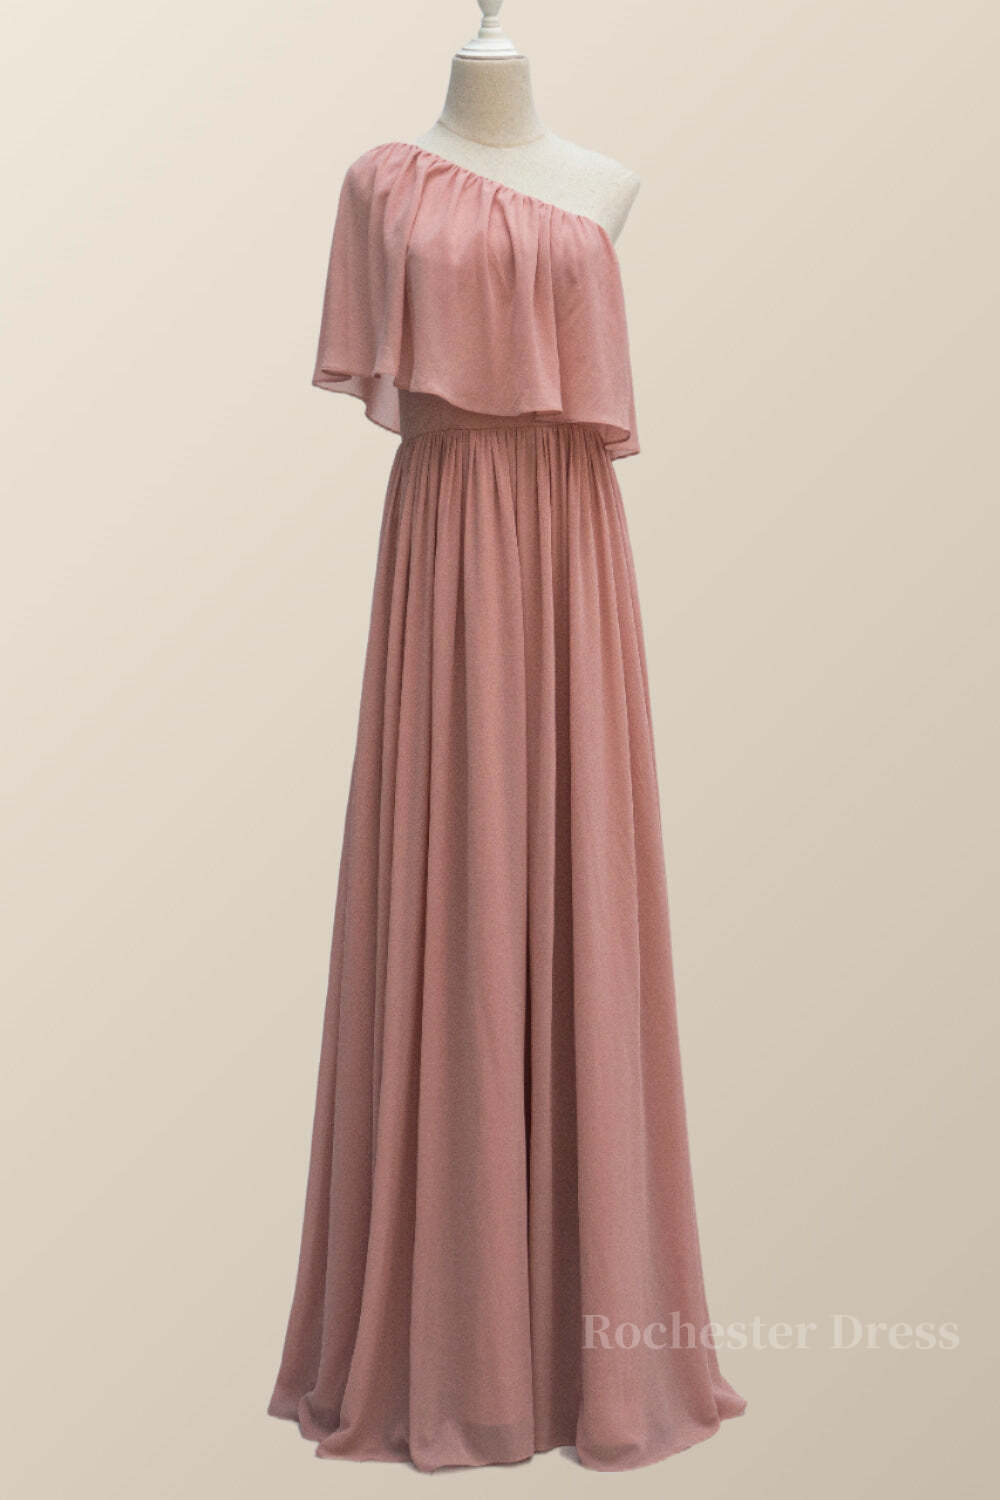 One Shoulder Blush Pink Chiffon Crepe Bridesmaid Dress